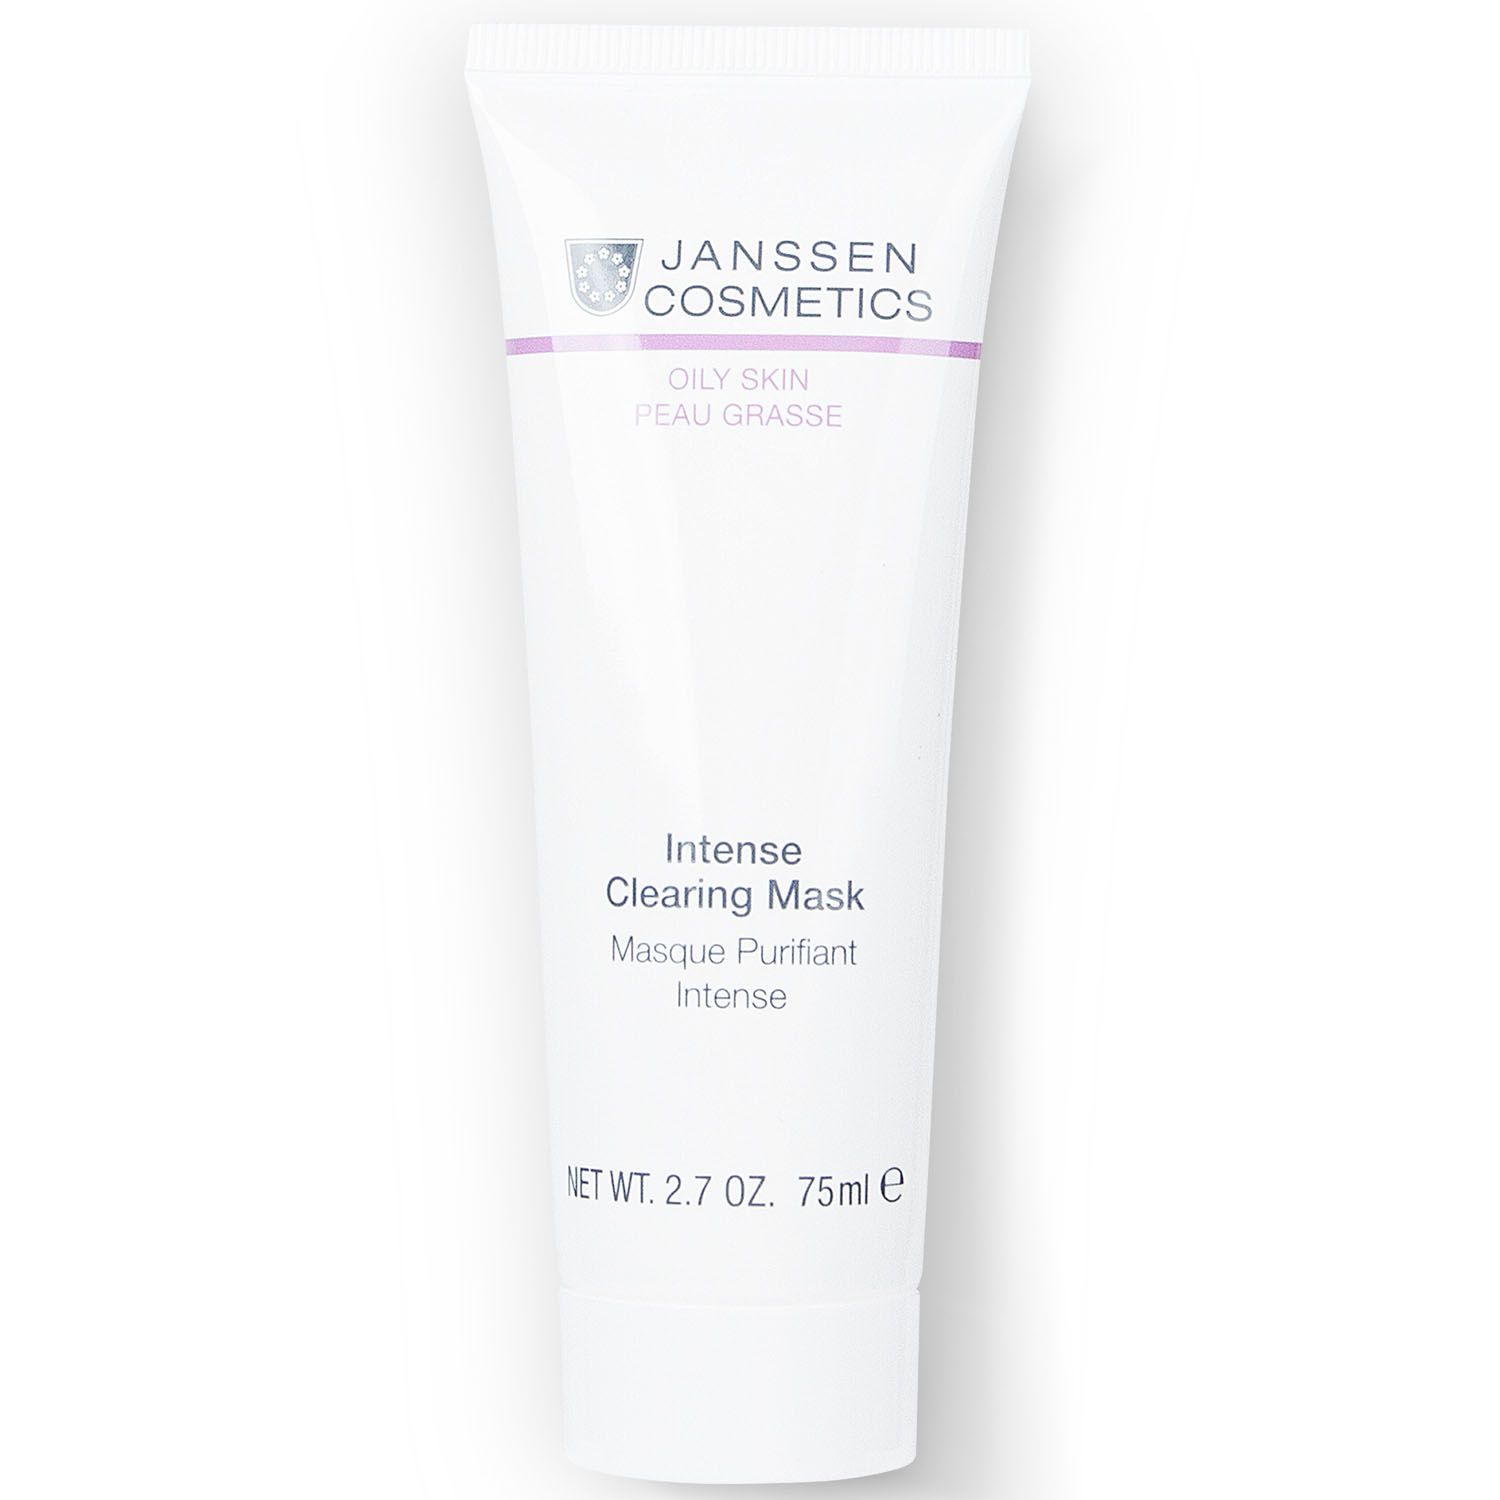 Janssen Cosmetics Интенсивно очищающая маска Intense Clearing Mask, 75 мл (Janssen Cosmetics, Oily skin) интенсивно очищающая маска для лица на основе каолина oily skin intense clearing mask 75мл